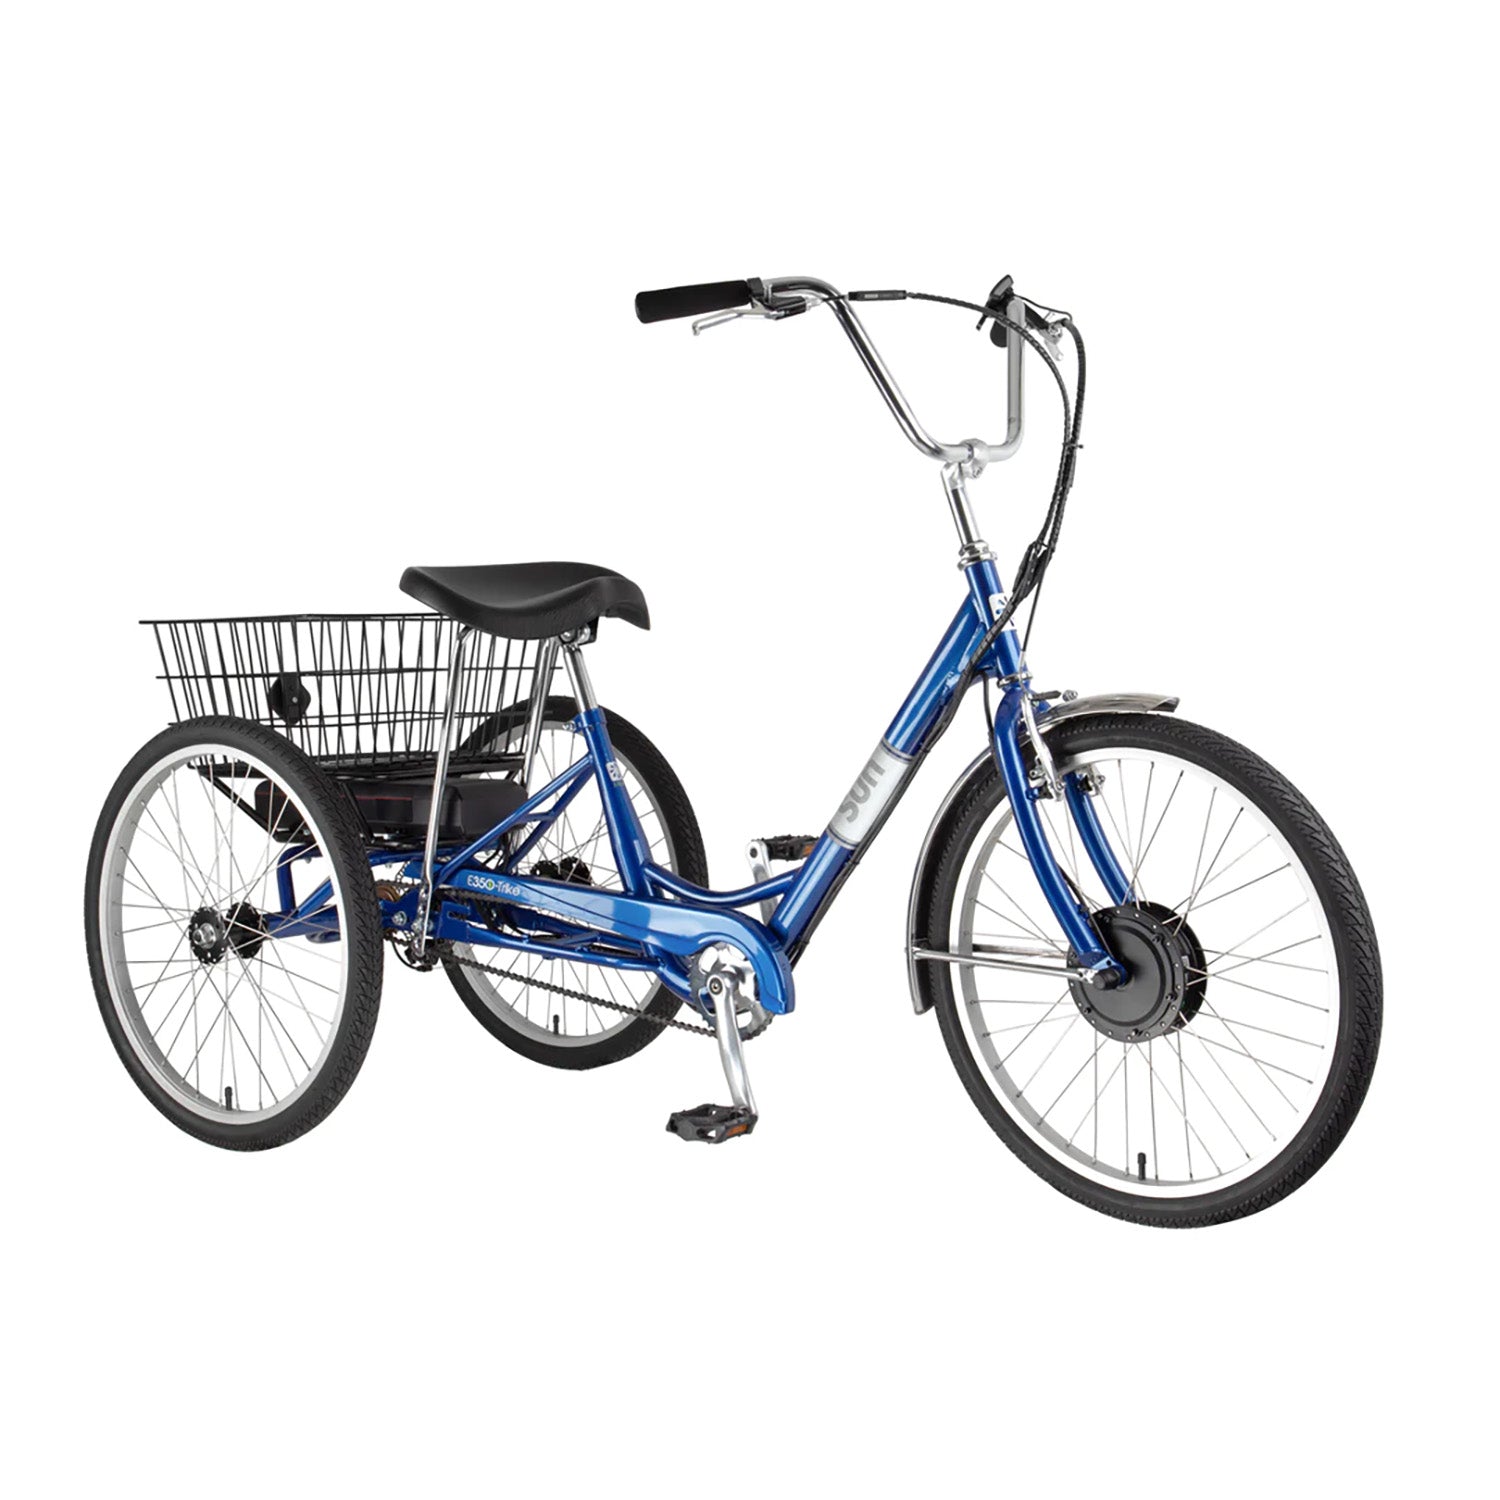 Sun Bicycle E350 Electric Trike, front view Blue Metallic, Bixby Bicycles, Oklahoma